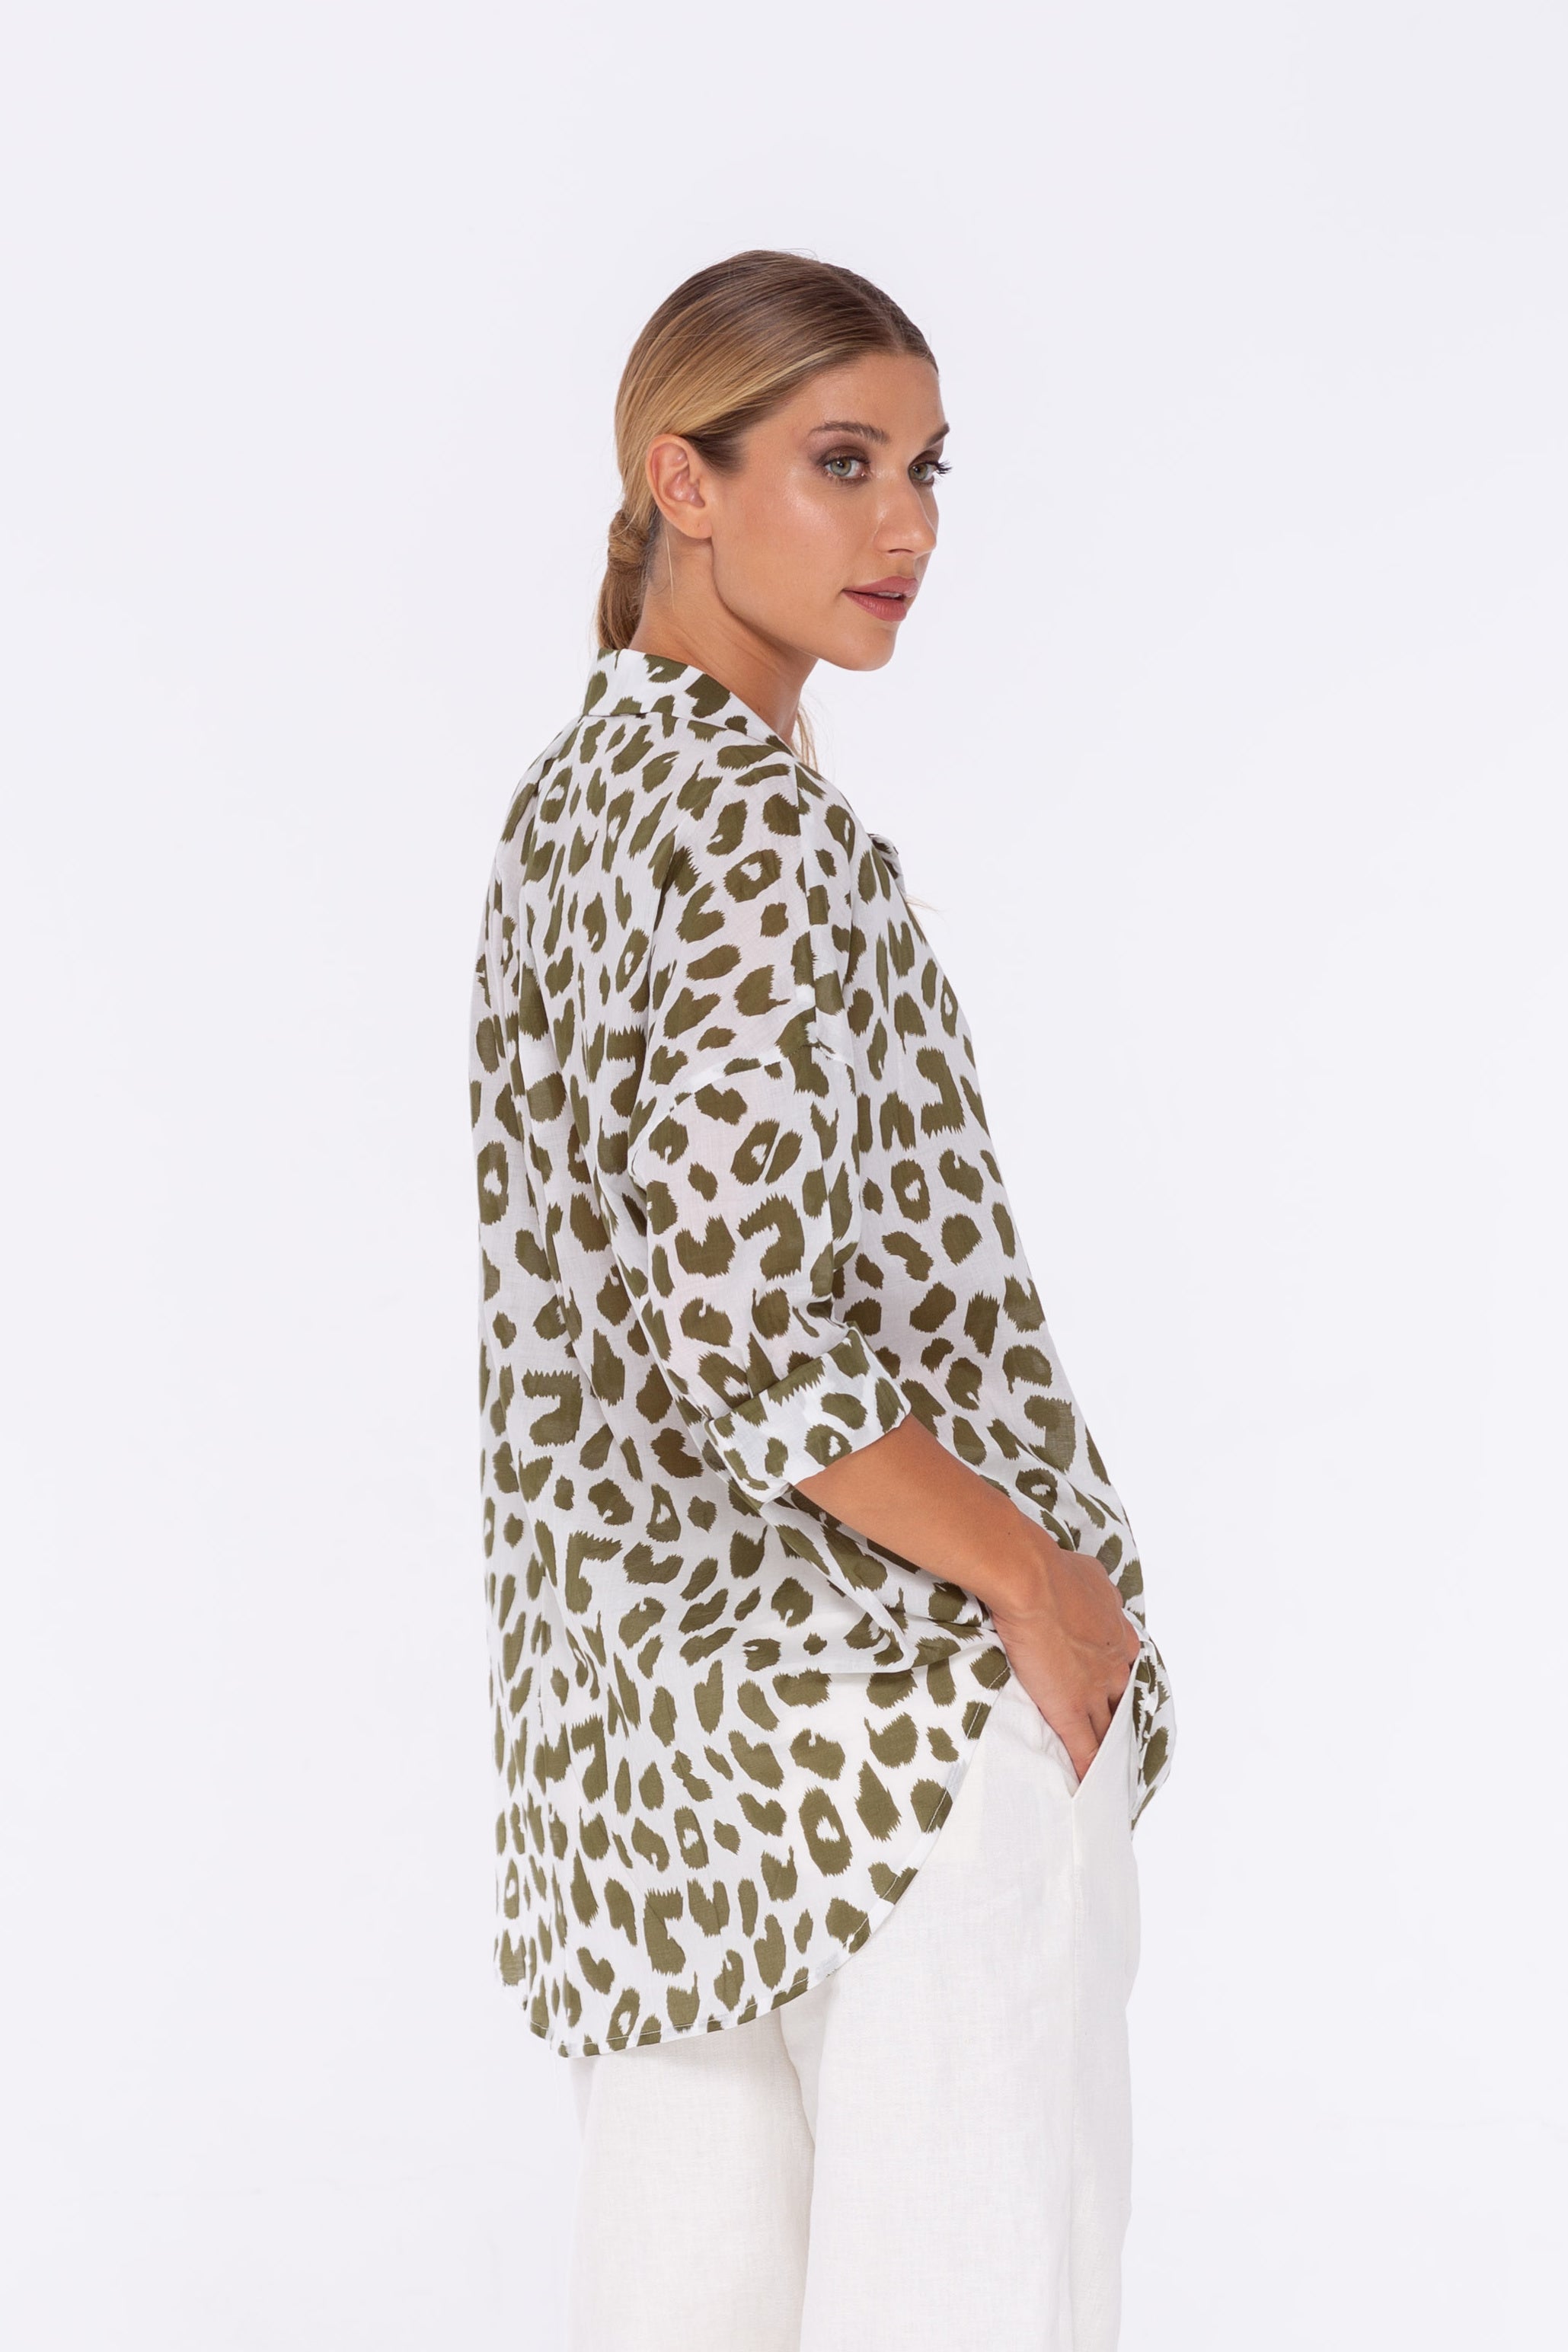 Defiant Shirt - Exclusive White/Fern Leopard Print